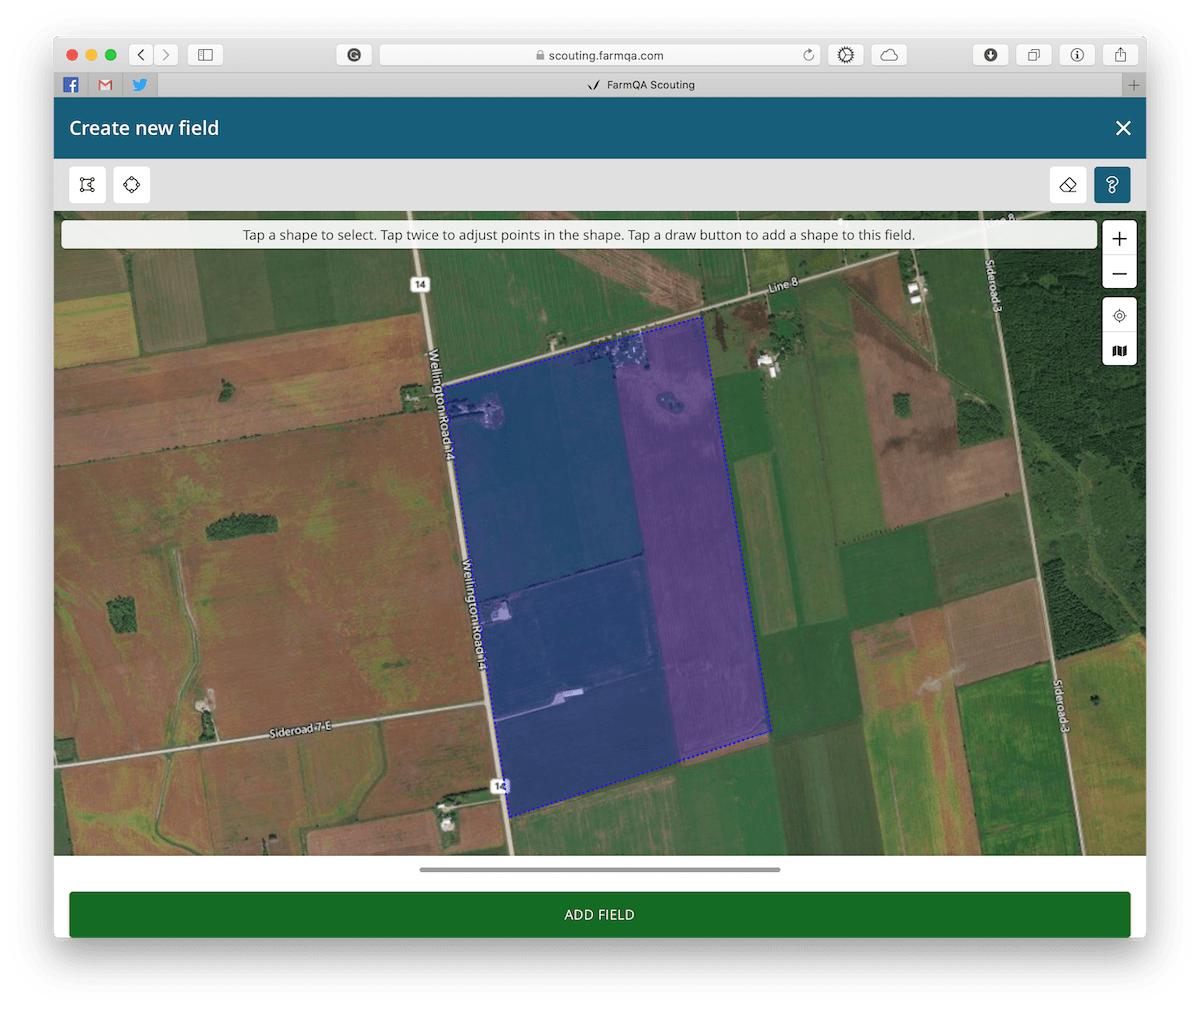 Screenshot of FarmQA Scouting running on a desktop browser on a Mac or PC